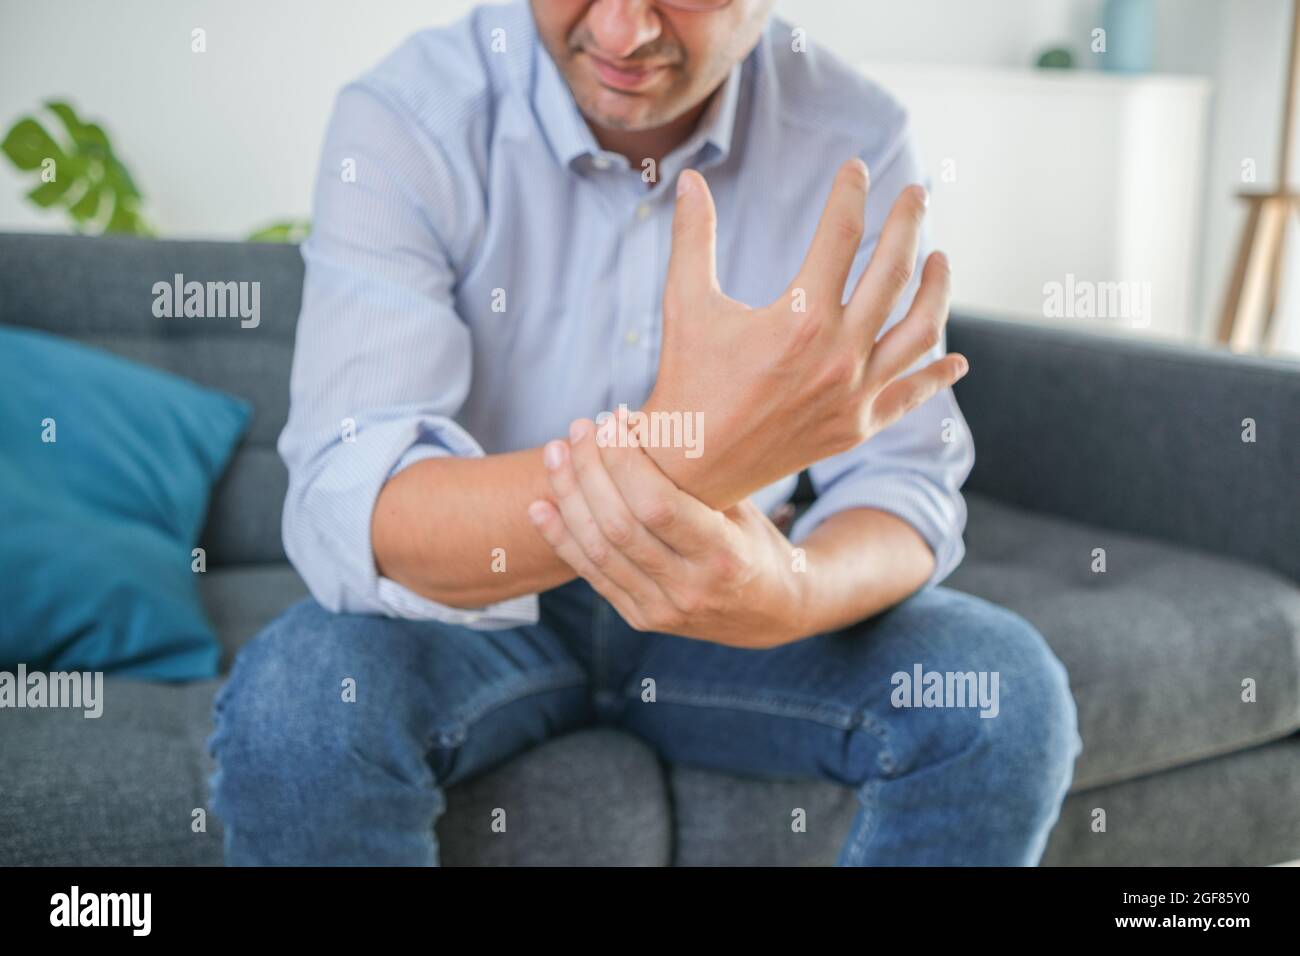 Painful wrist injury symptom after sitting on the sofa Stock Photo